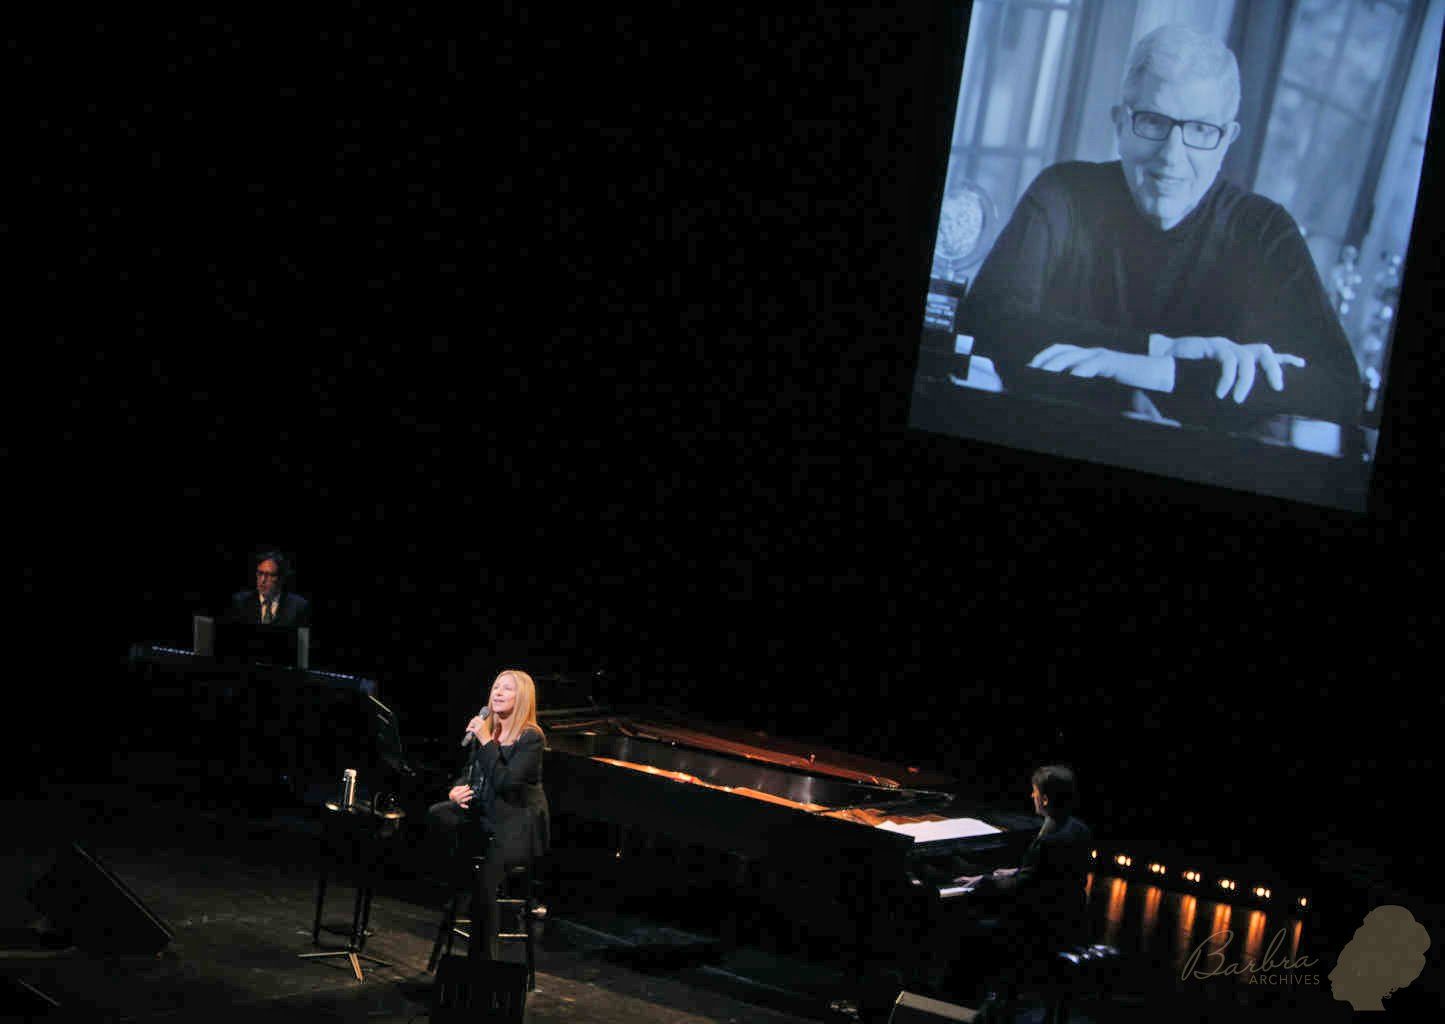 Streisand on stage at Juilliard with Marvin Hamlisch's photograph behind her.